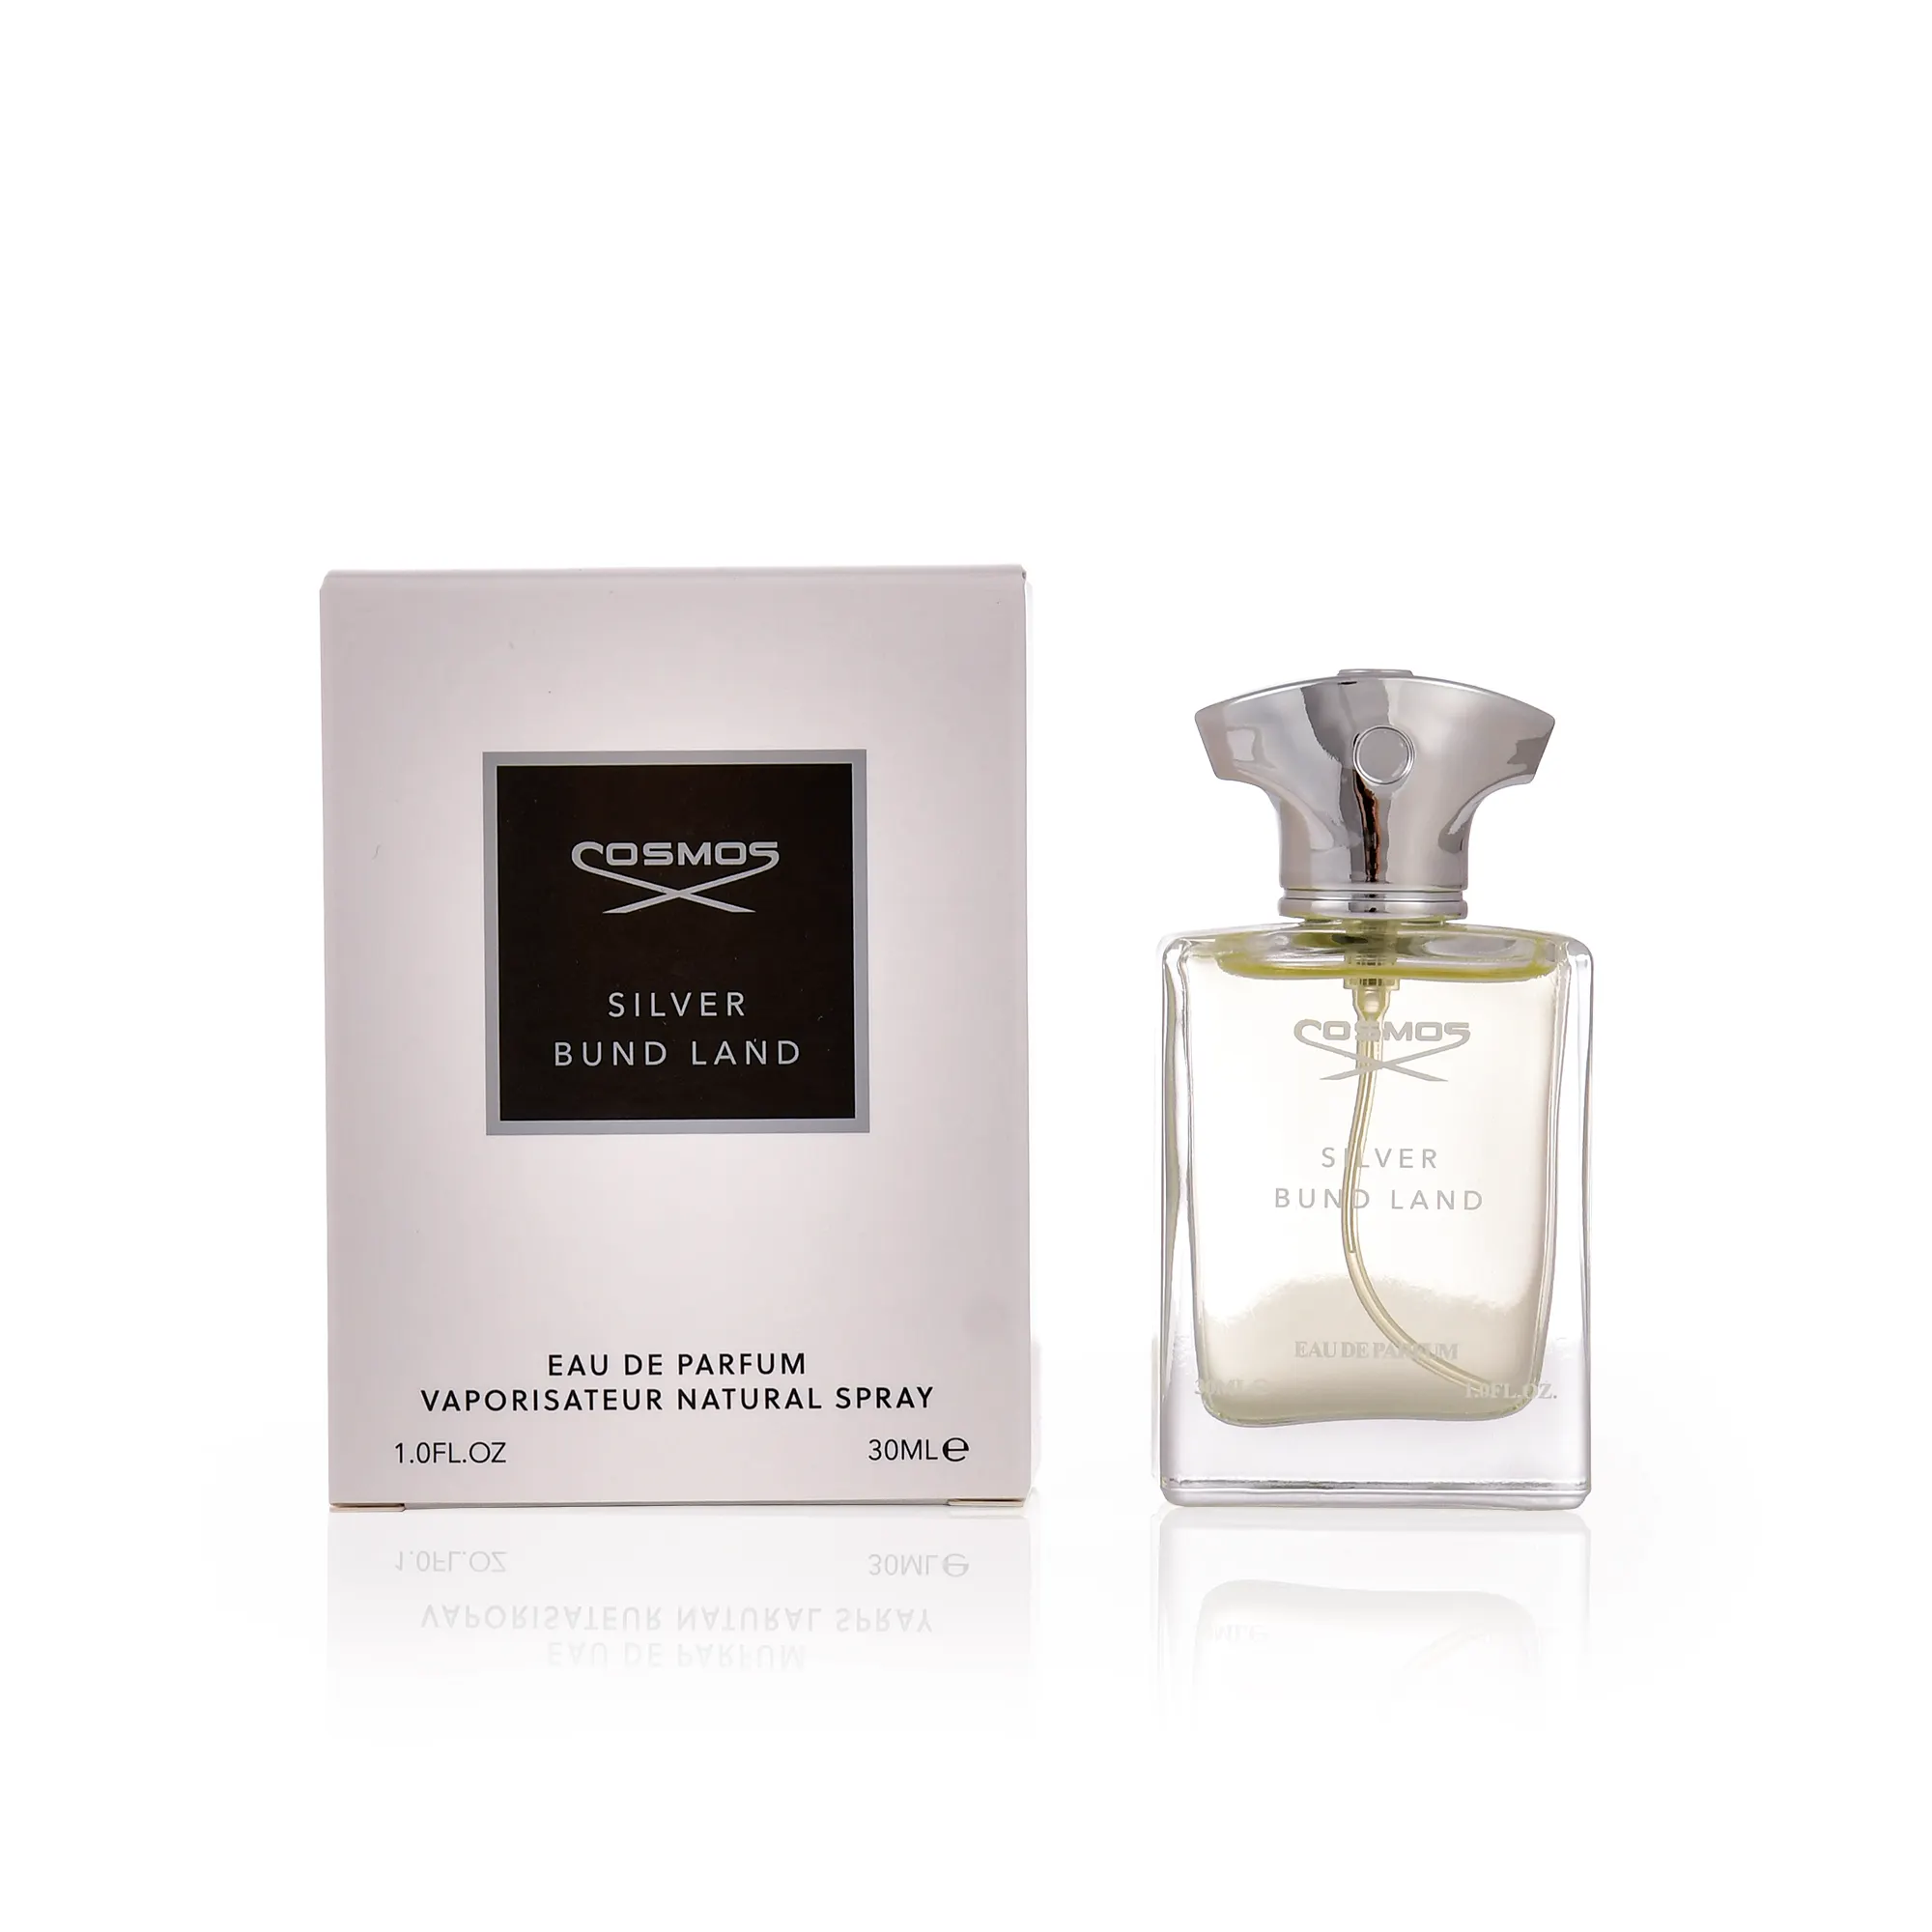 Lovali Luca Bossi Perfume Gift Sets Original Imported Luxury Manufacturer Secret 30ml Mini Perfume